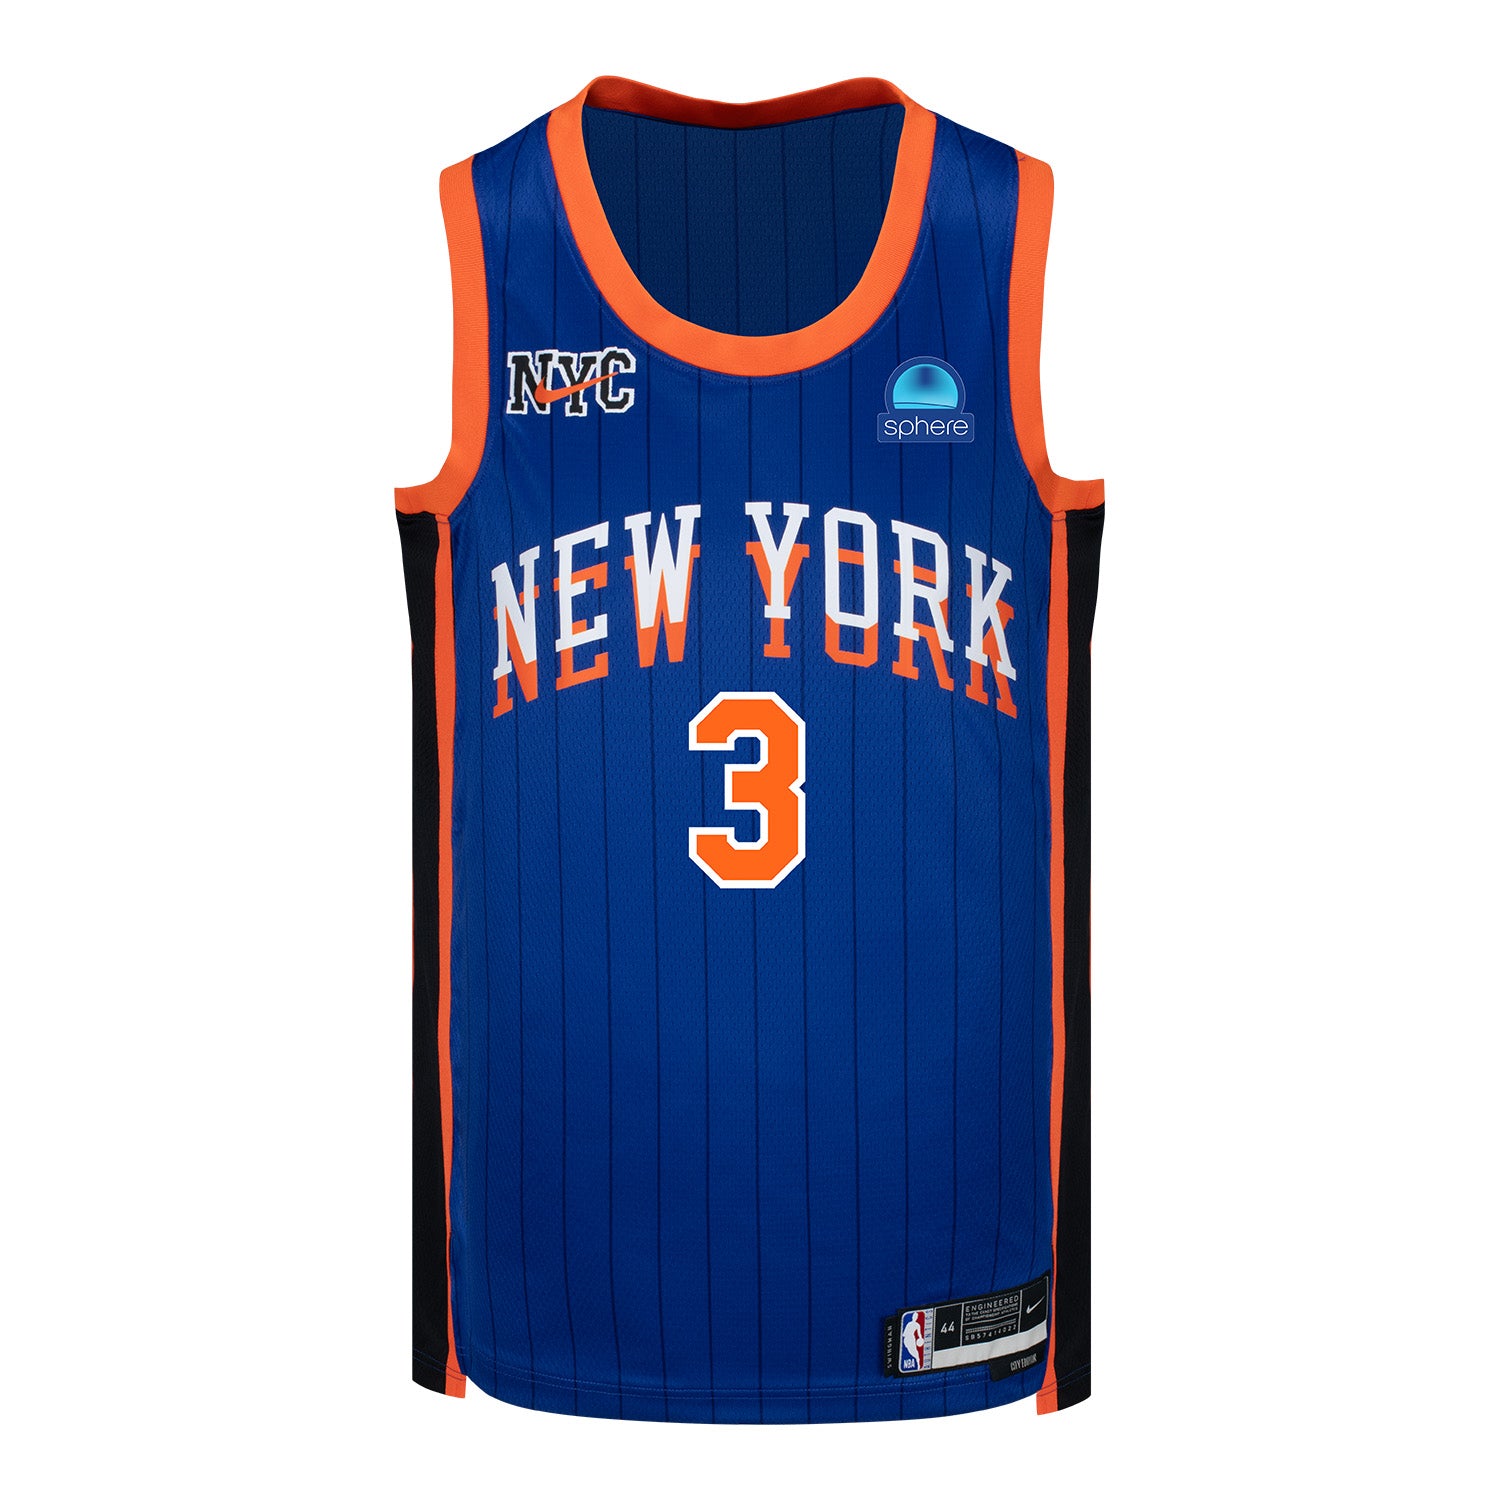 Nike Knicks 22-23 Playoff Participant Mantra T-Shirt